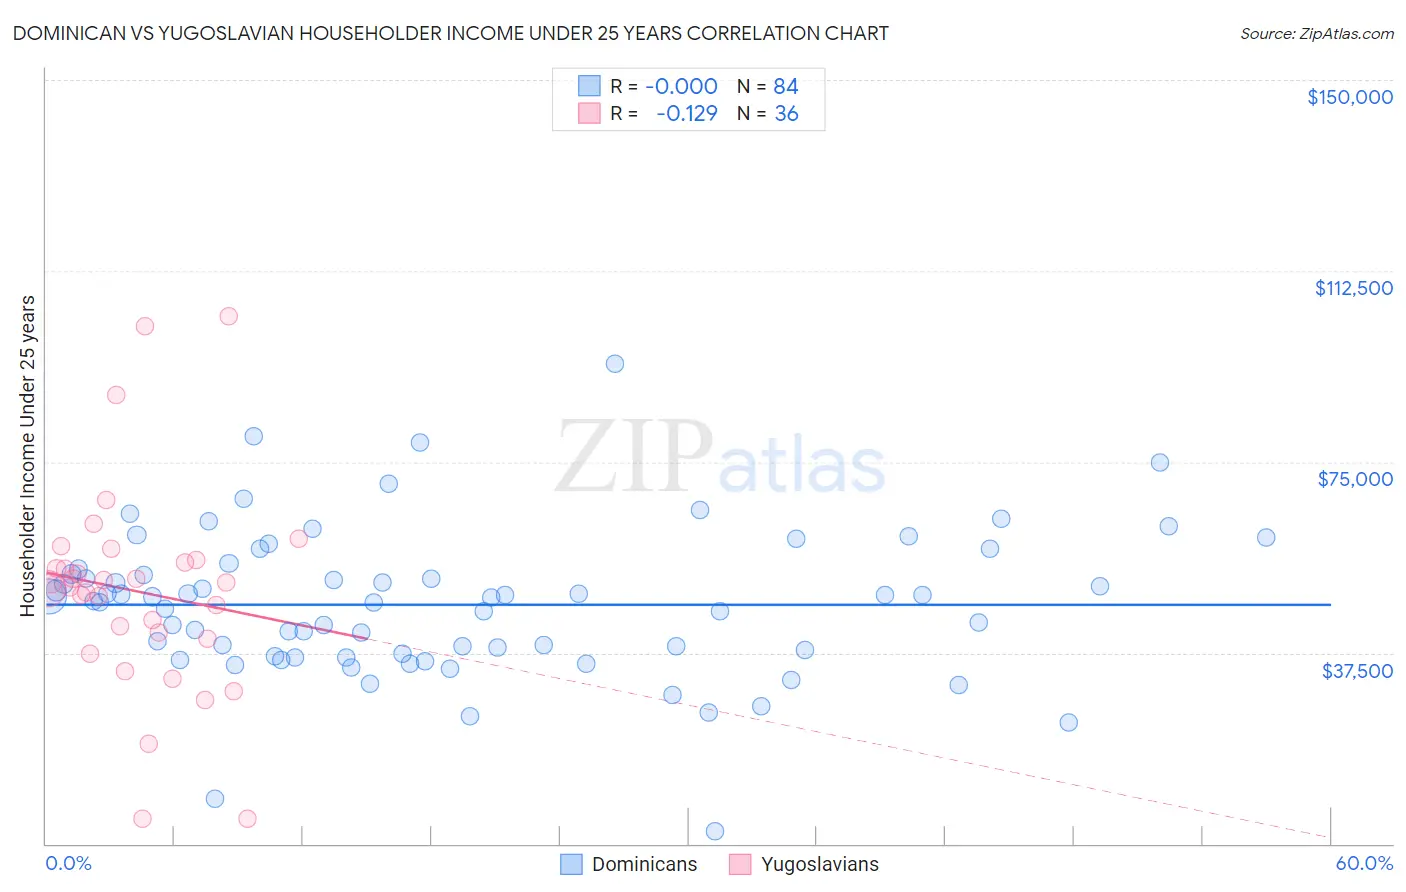 Dominican vs Yugoslavian Householder Income Under 25 years